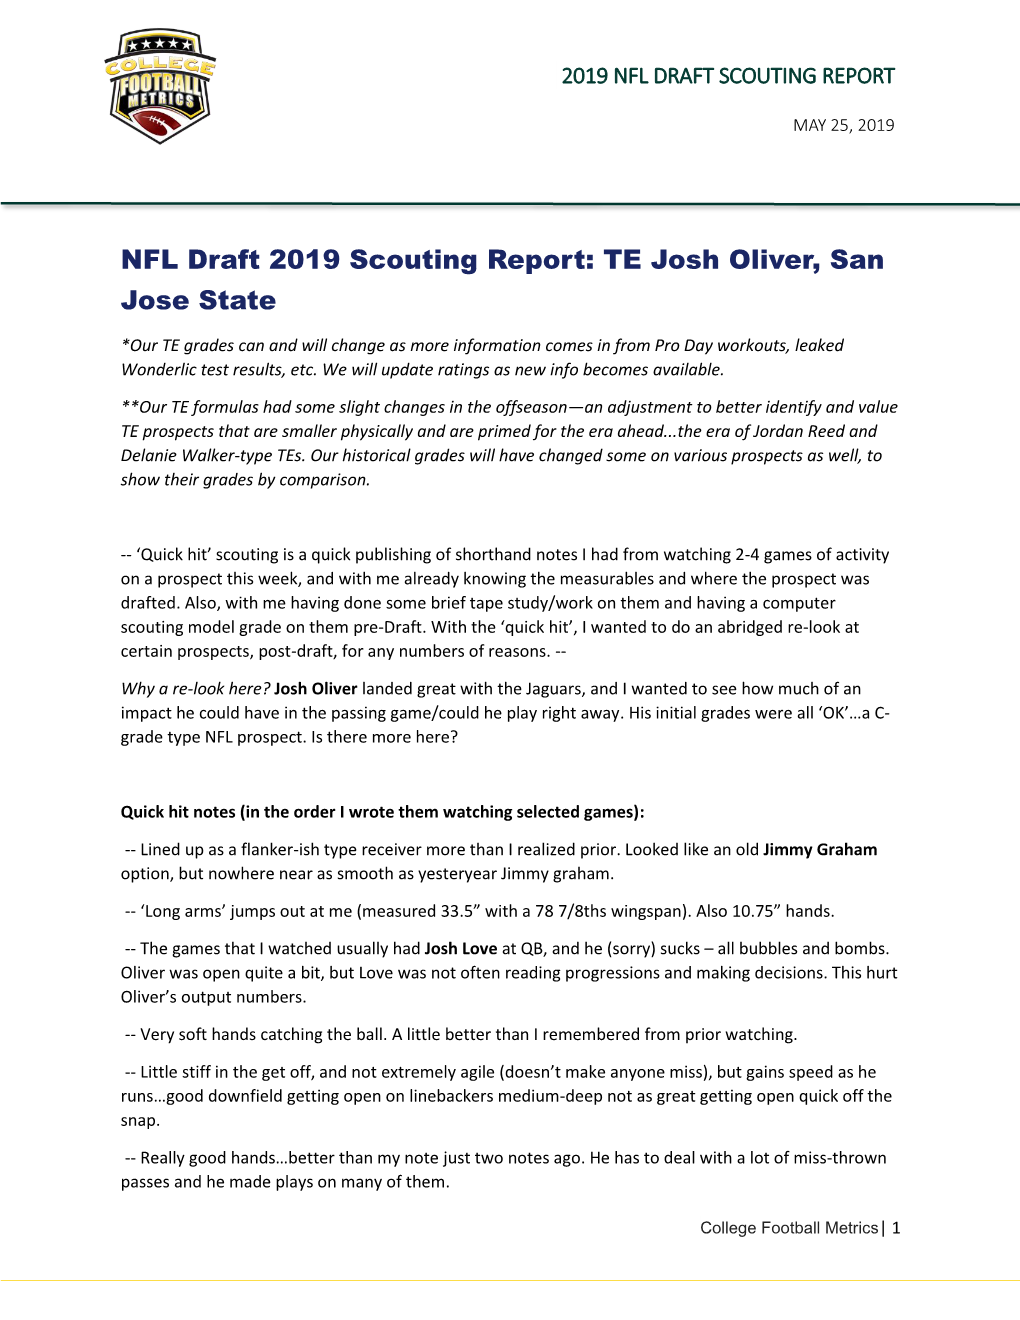 NFL Draft 2019 Scouting Report: TE Josh Oliver, San Jose State